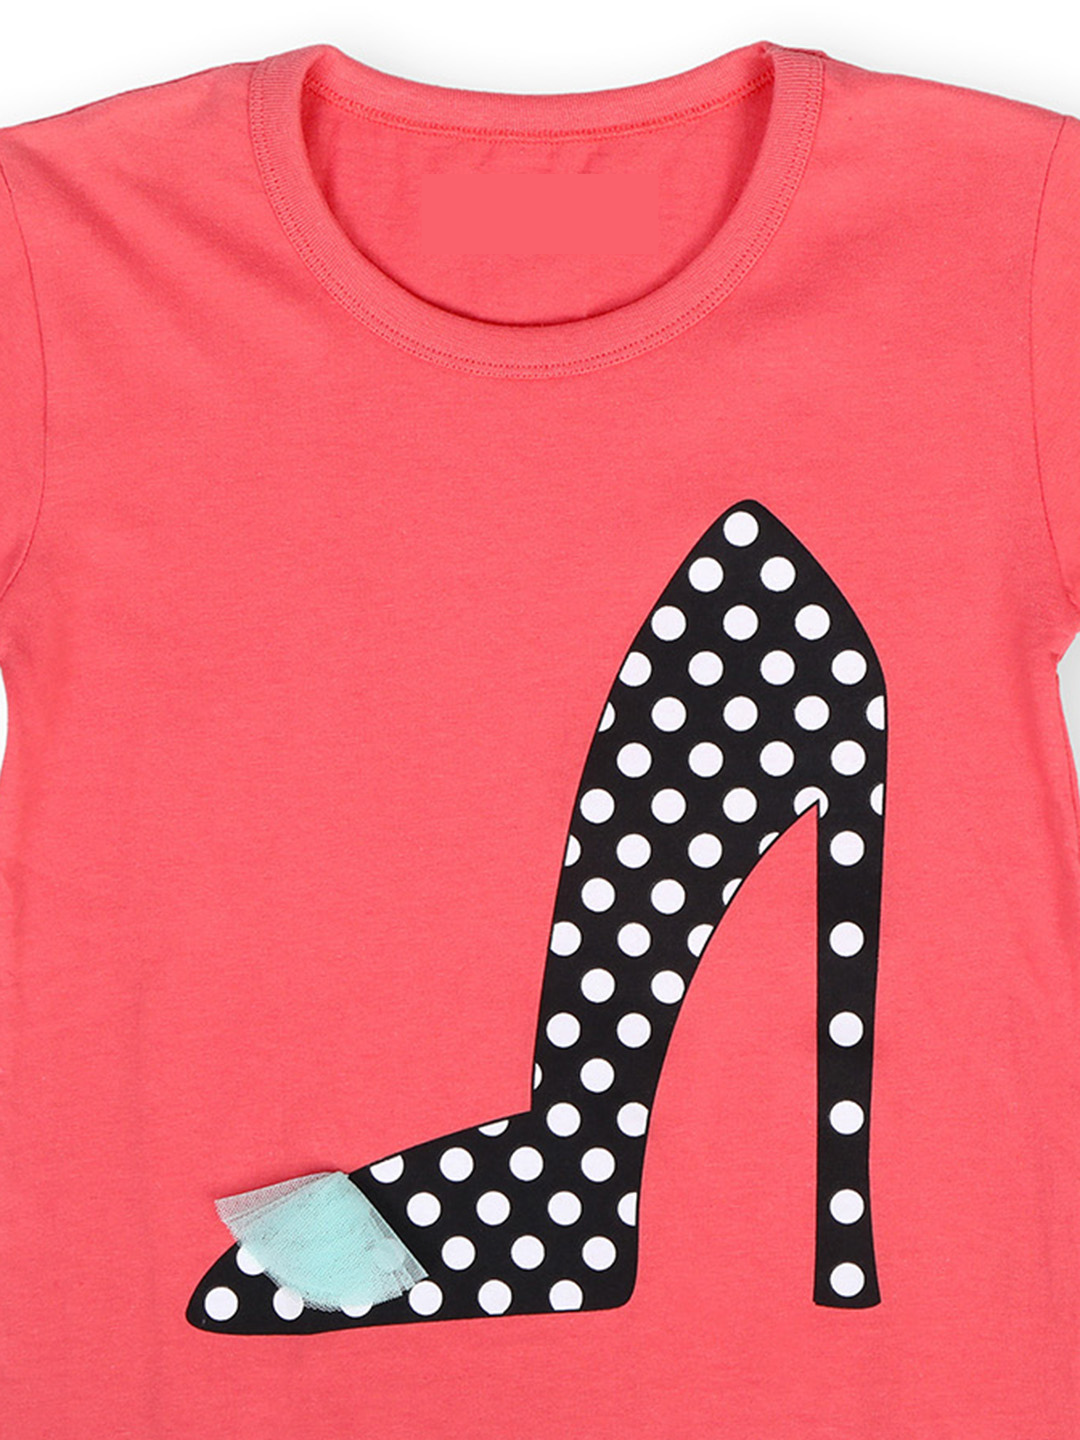 TWGE - Kids Tshirt for Girls - Printed Regular Fit Tees - Color Pink